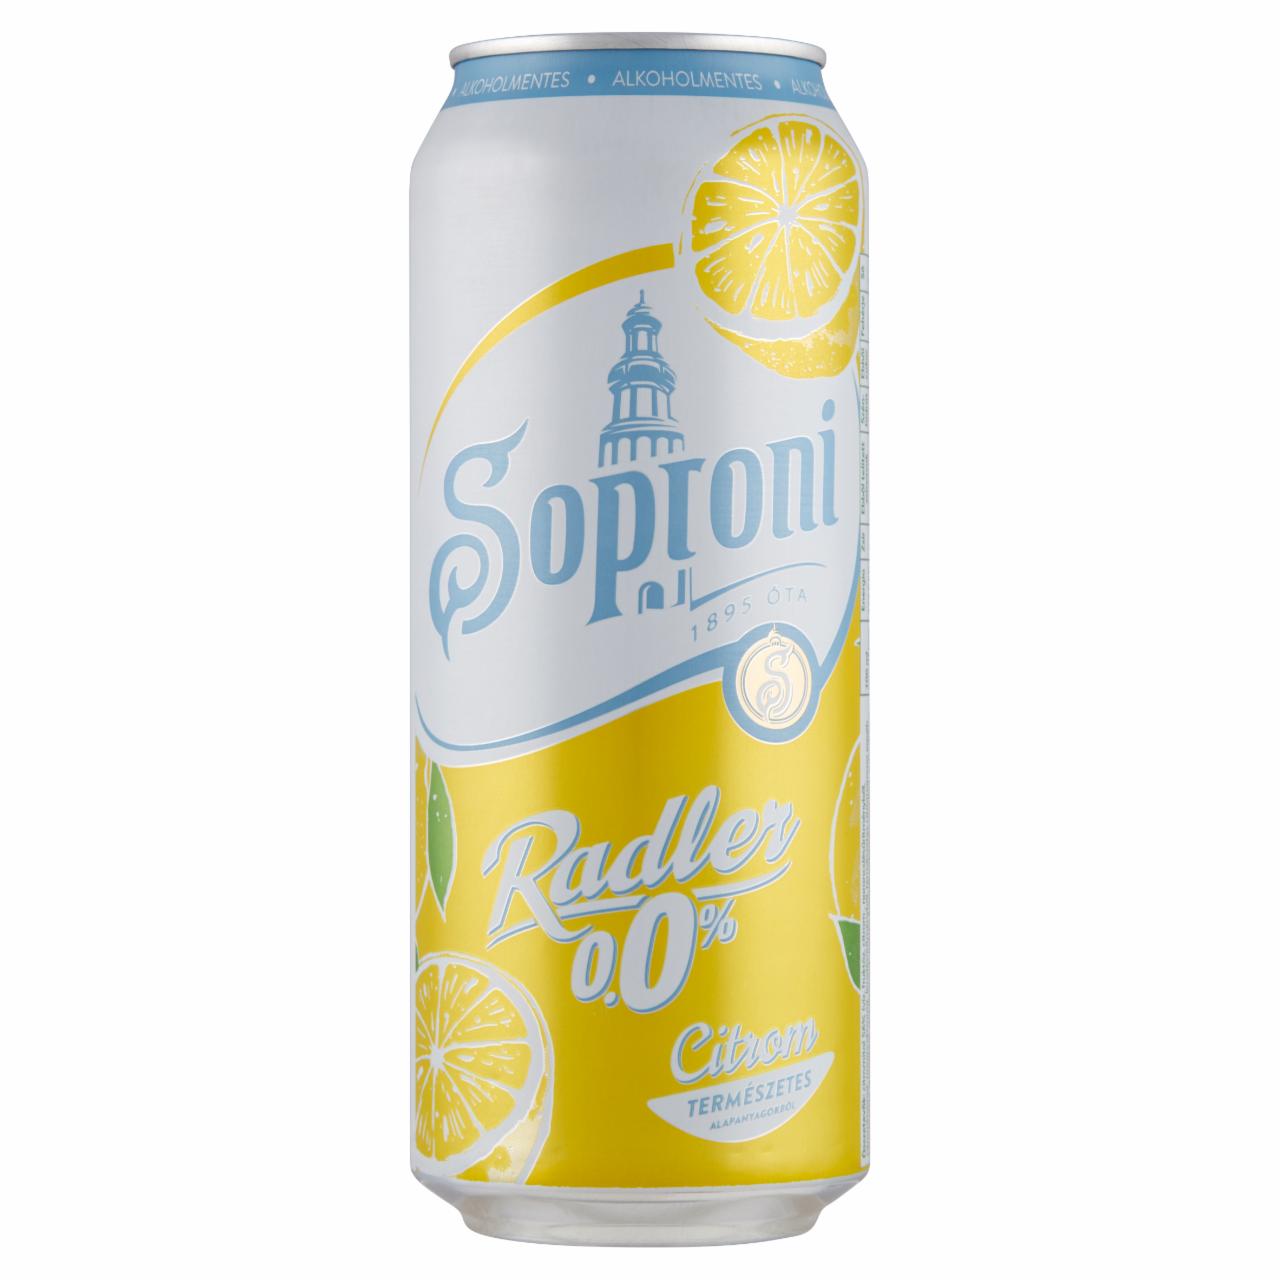 Képek - Soproni Radler citromos alkoholmentes sörital 0,5 l doboz